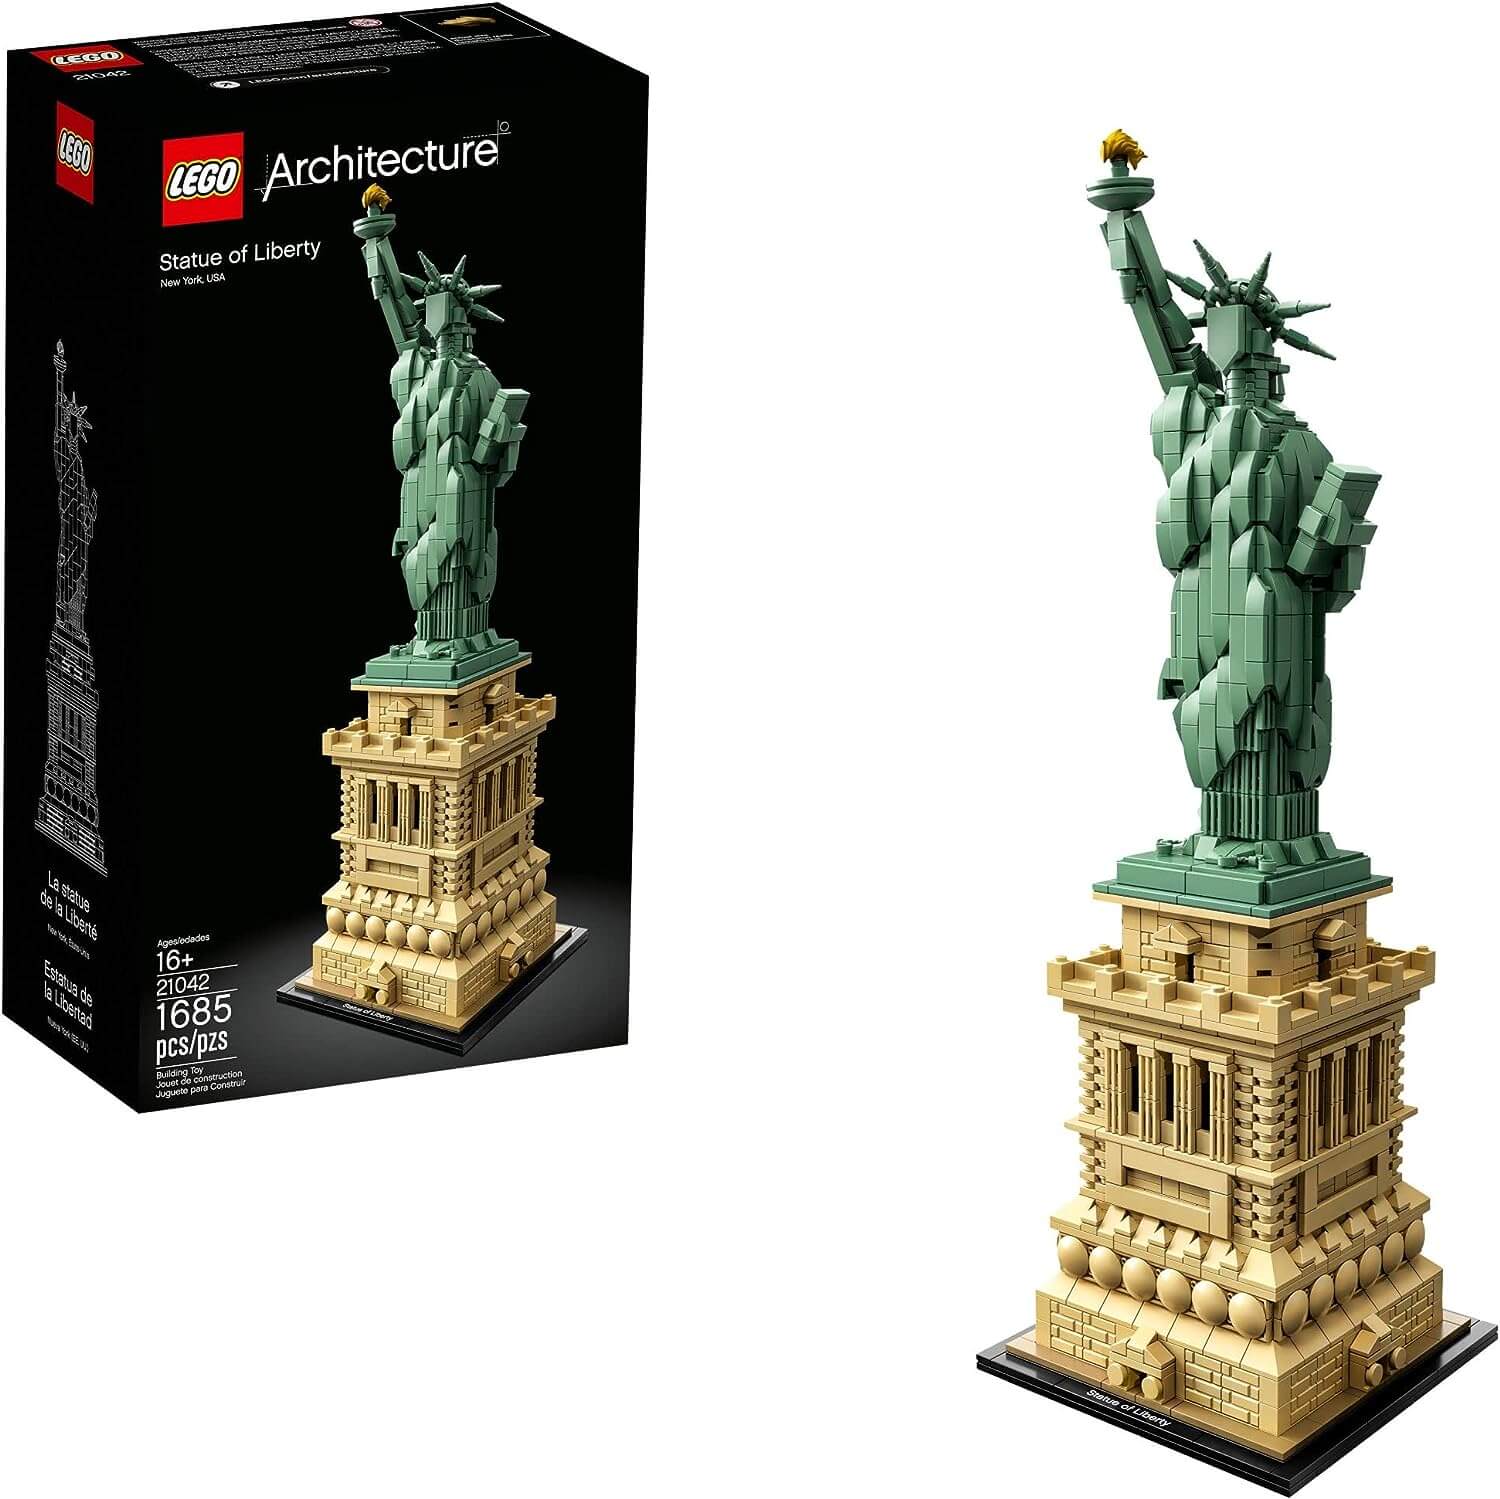 4. LEGO Architecture Statue of Liberty (#21042) - $169.99 🗽